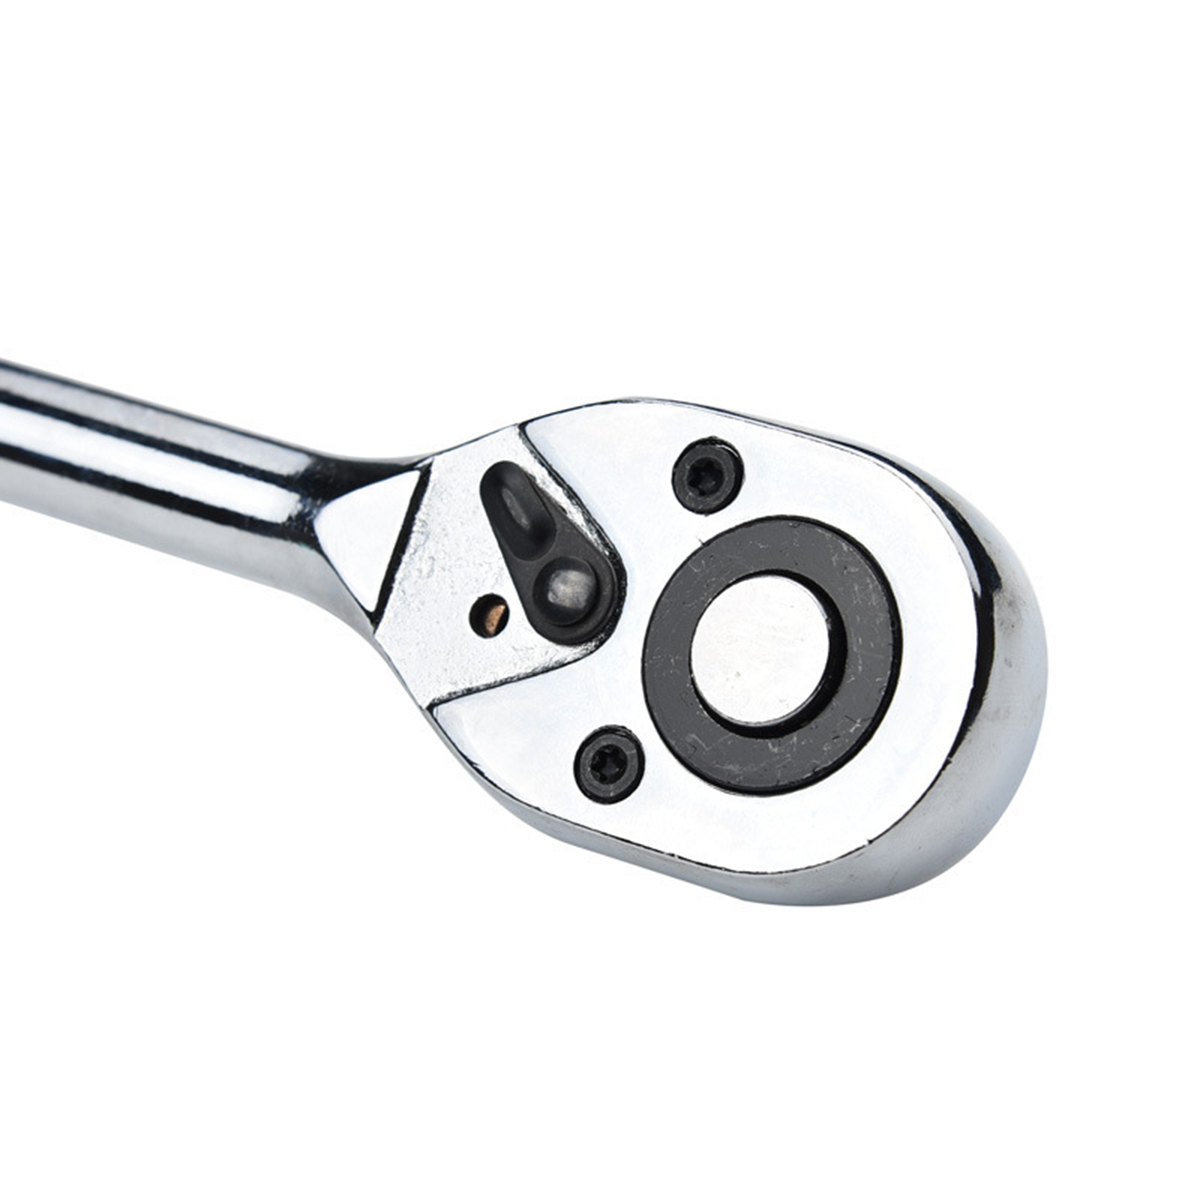 38-Handle-Drive-Socket-Ratchet-Spanner-Wrench-Quick-Release-24-Teeth-Repair-Tool-1387512-9